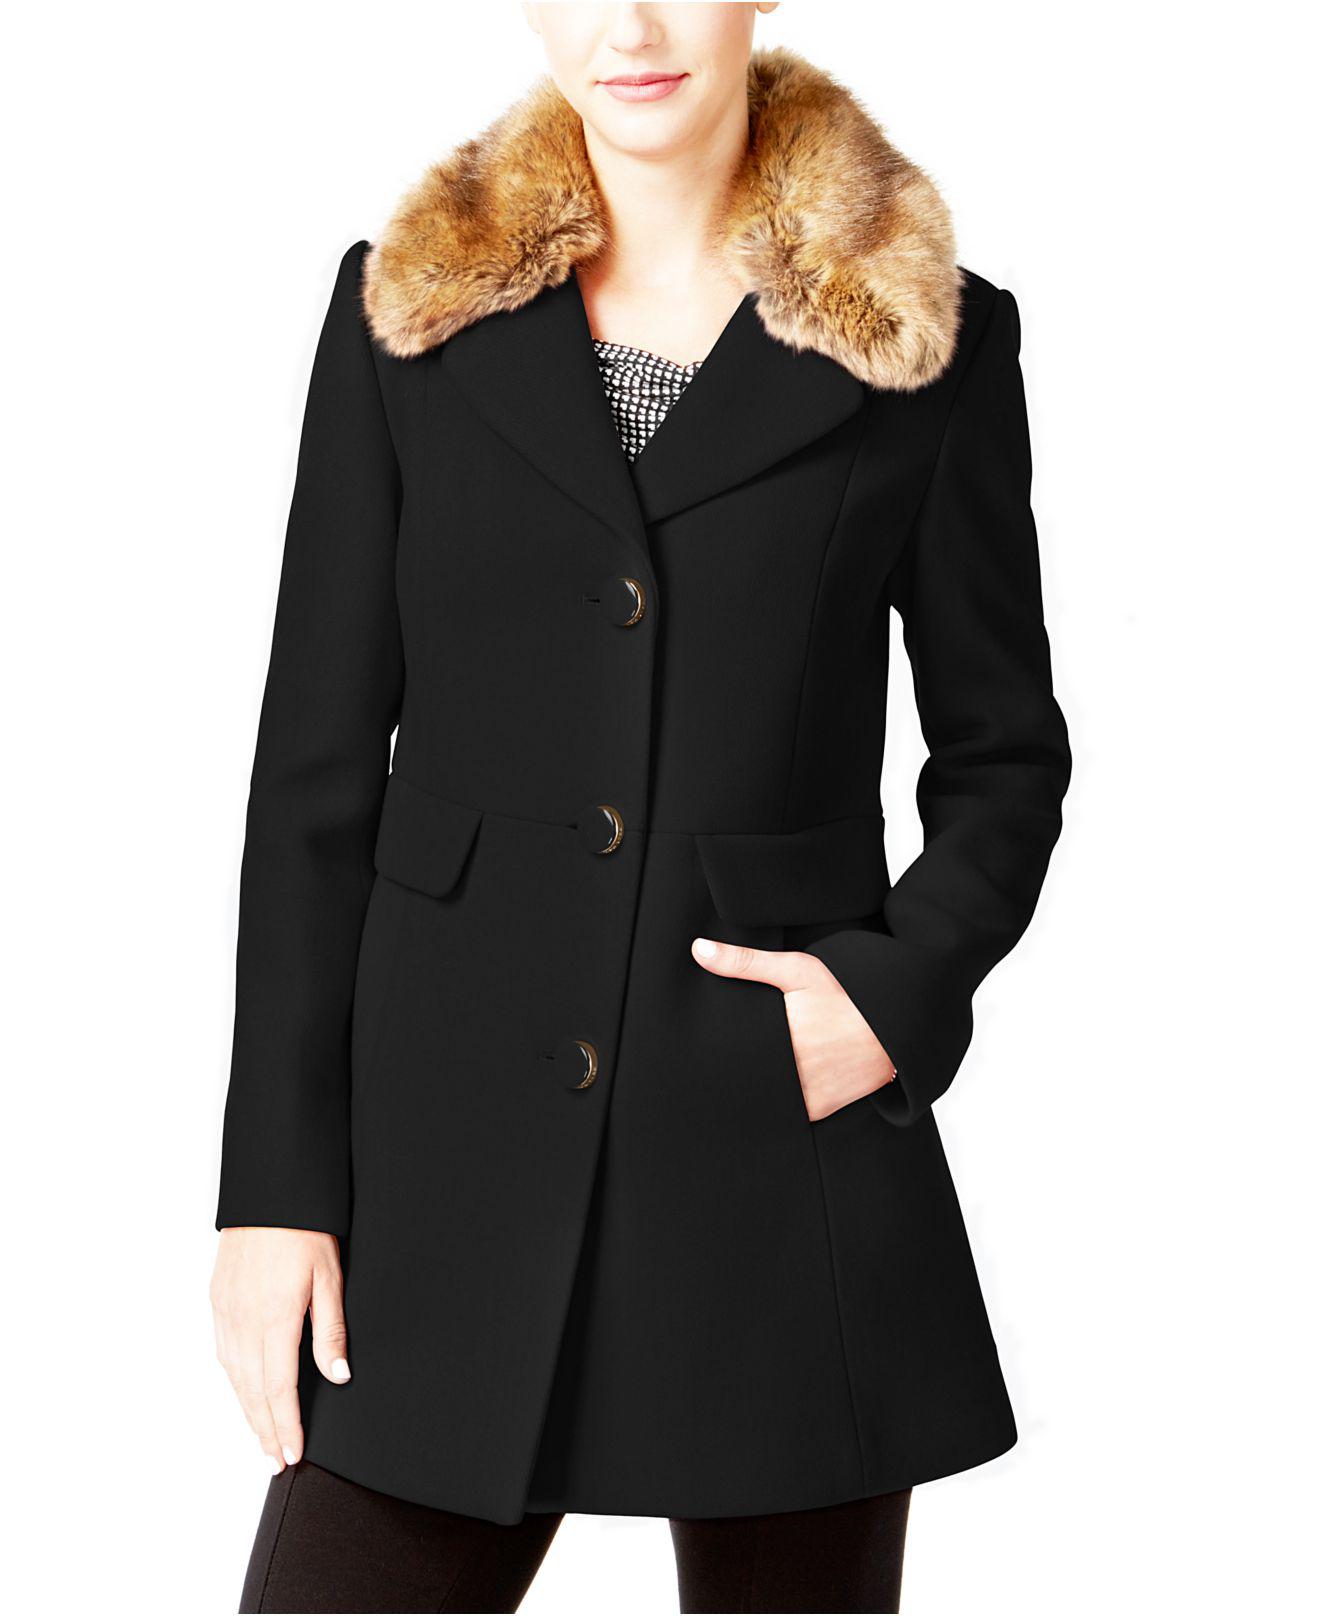 anklageren Ret gambling Kate Spade Faux-fur-collar Wool-blend Peacoat in Black | Lyst